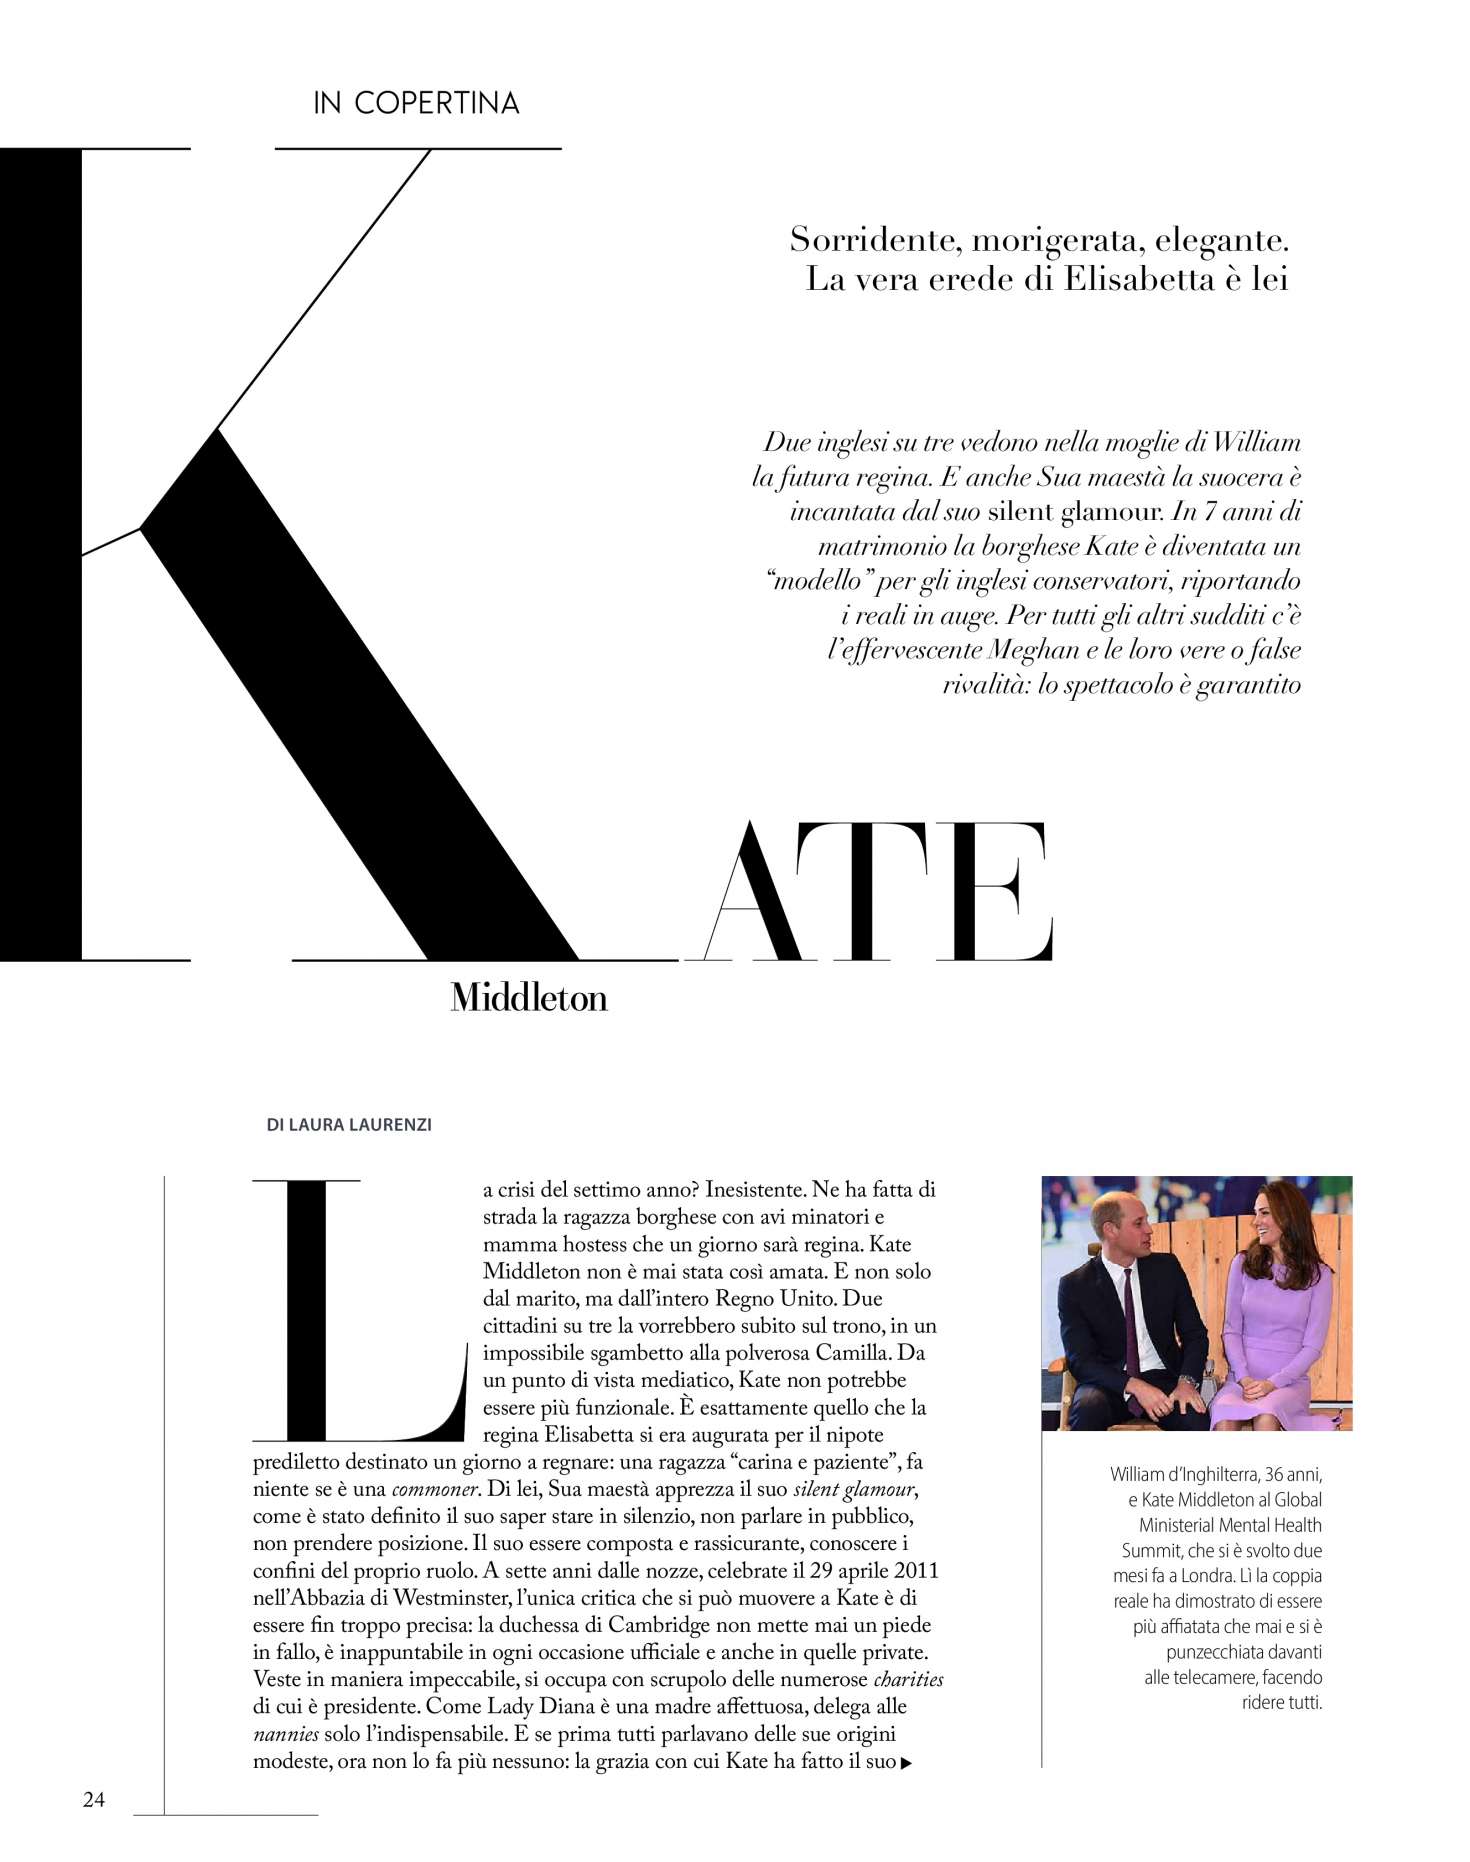 Kate Middleton â€“ F Magazine (December 2018)